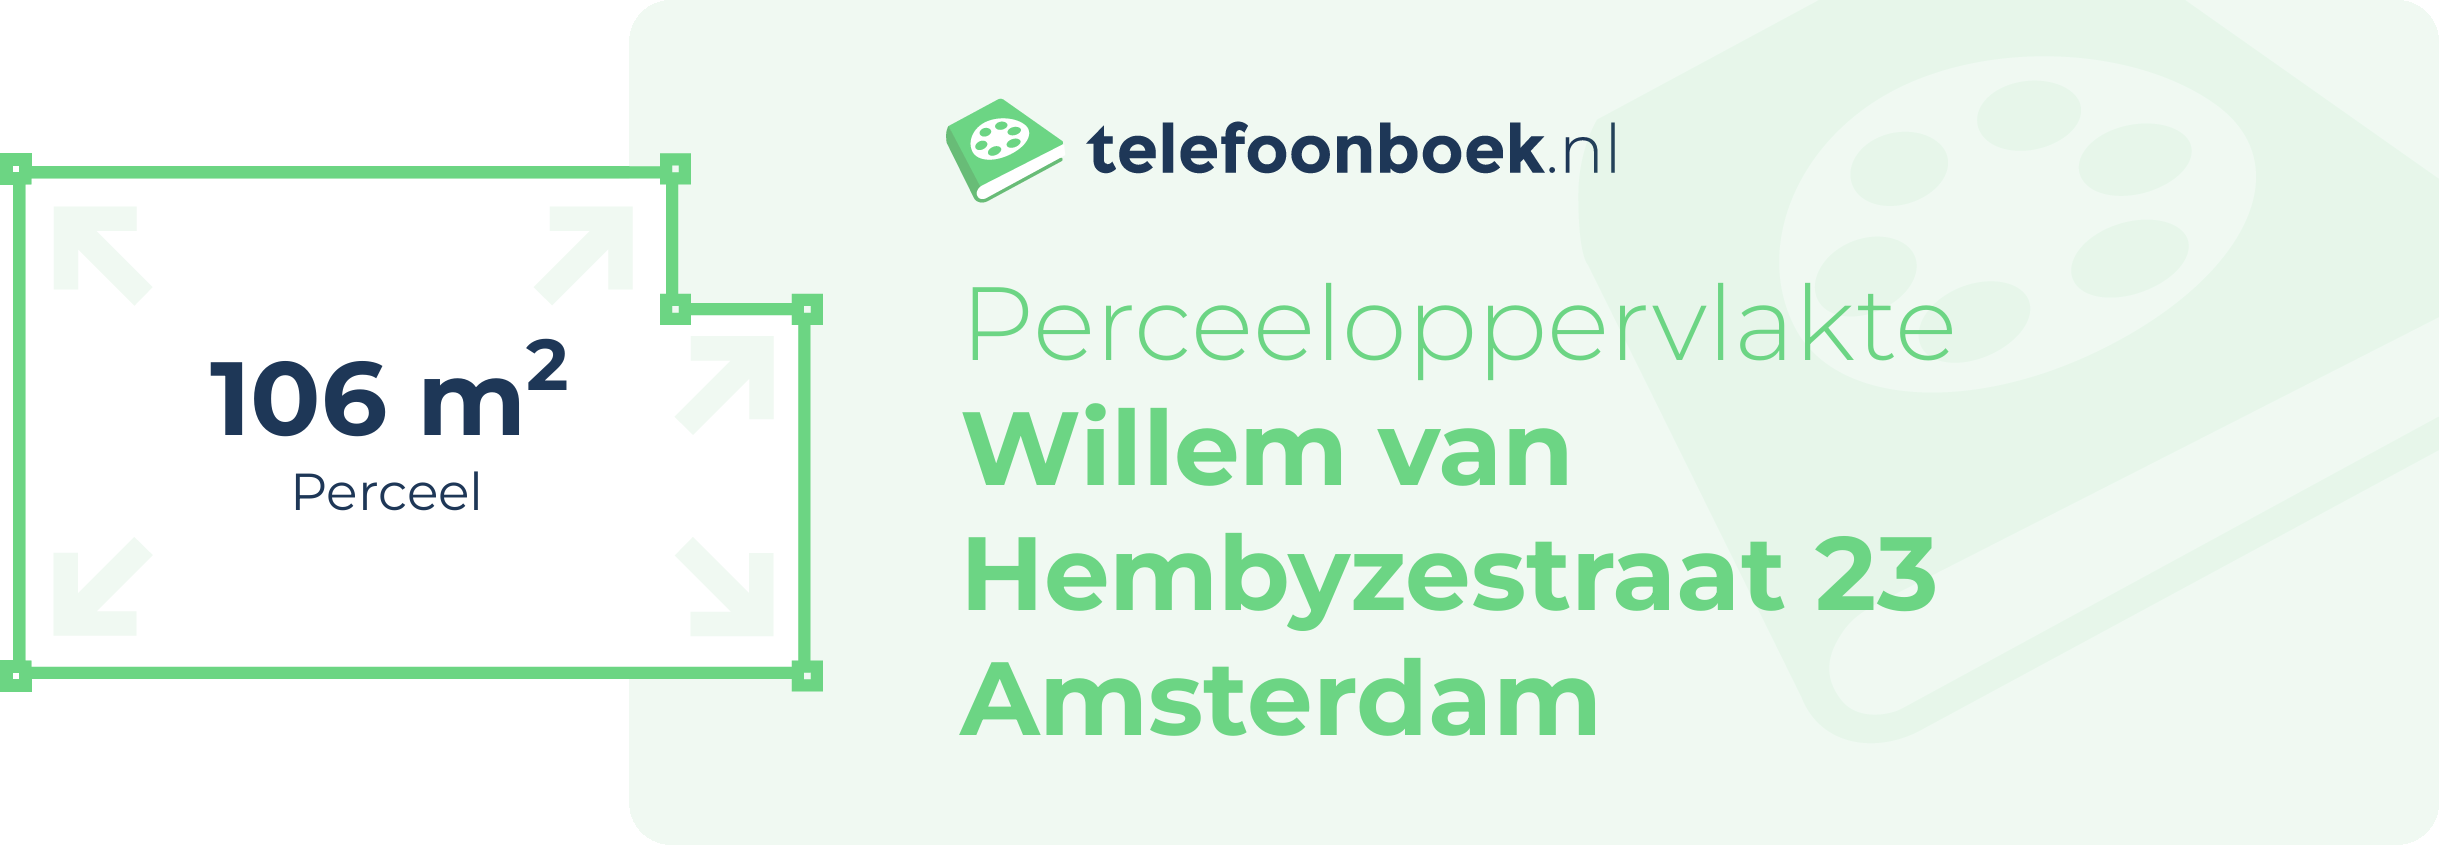 Perceeloppervlakte Willem Van Hembyzestraat 23 Amsterdam